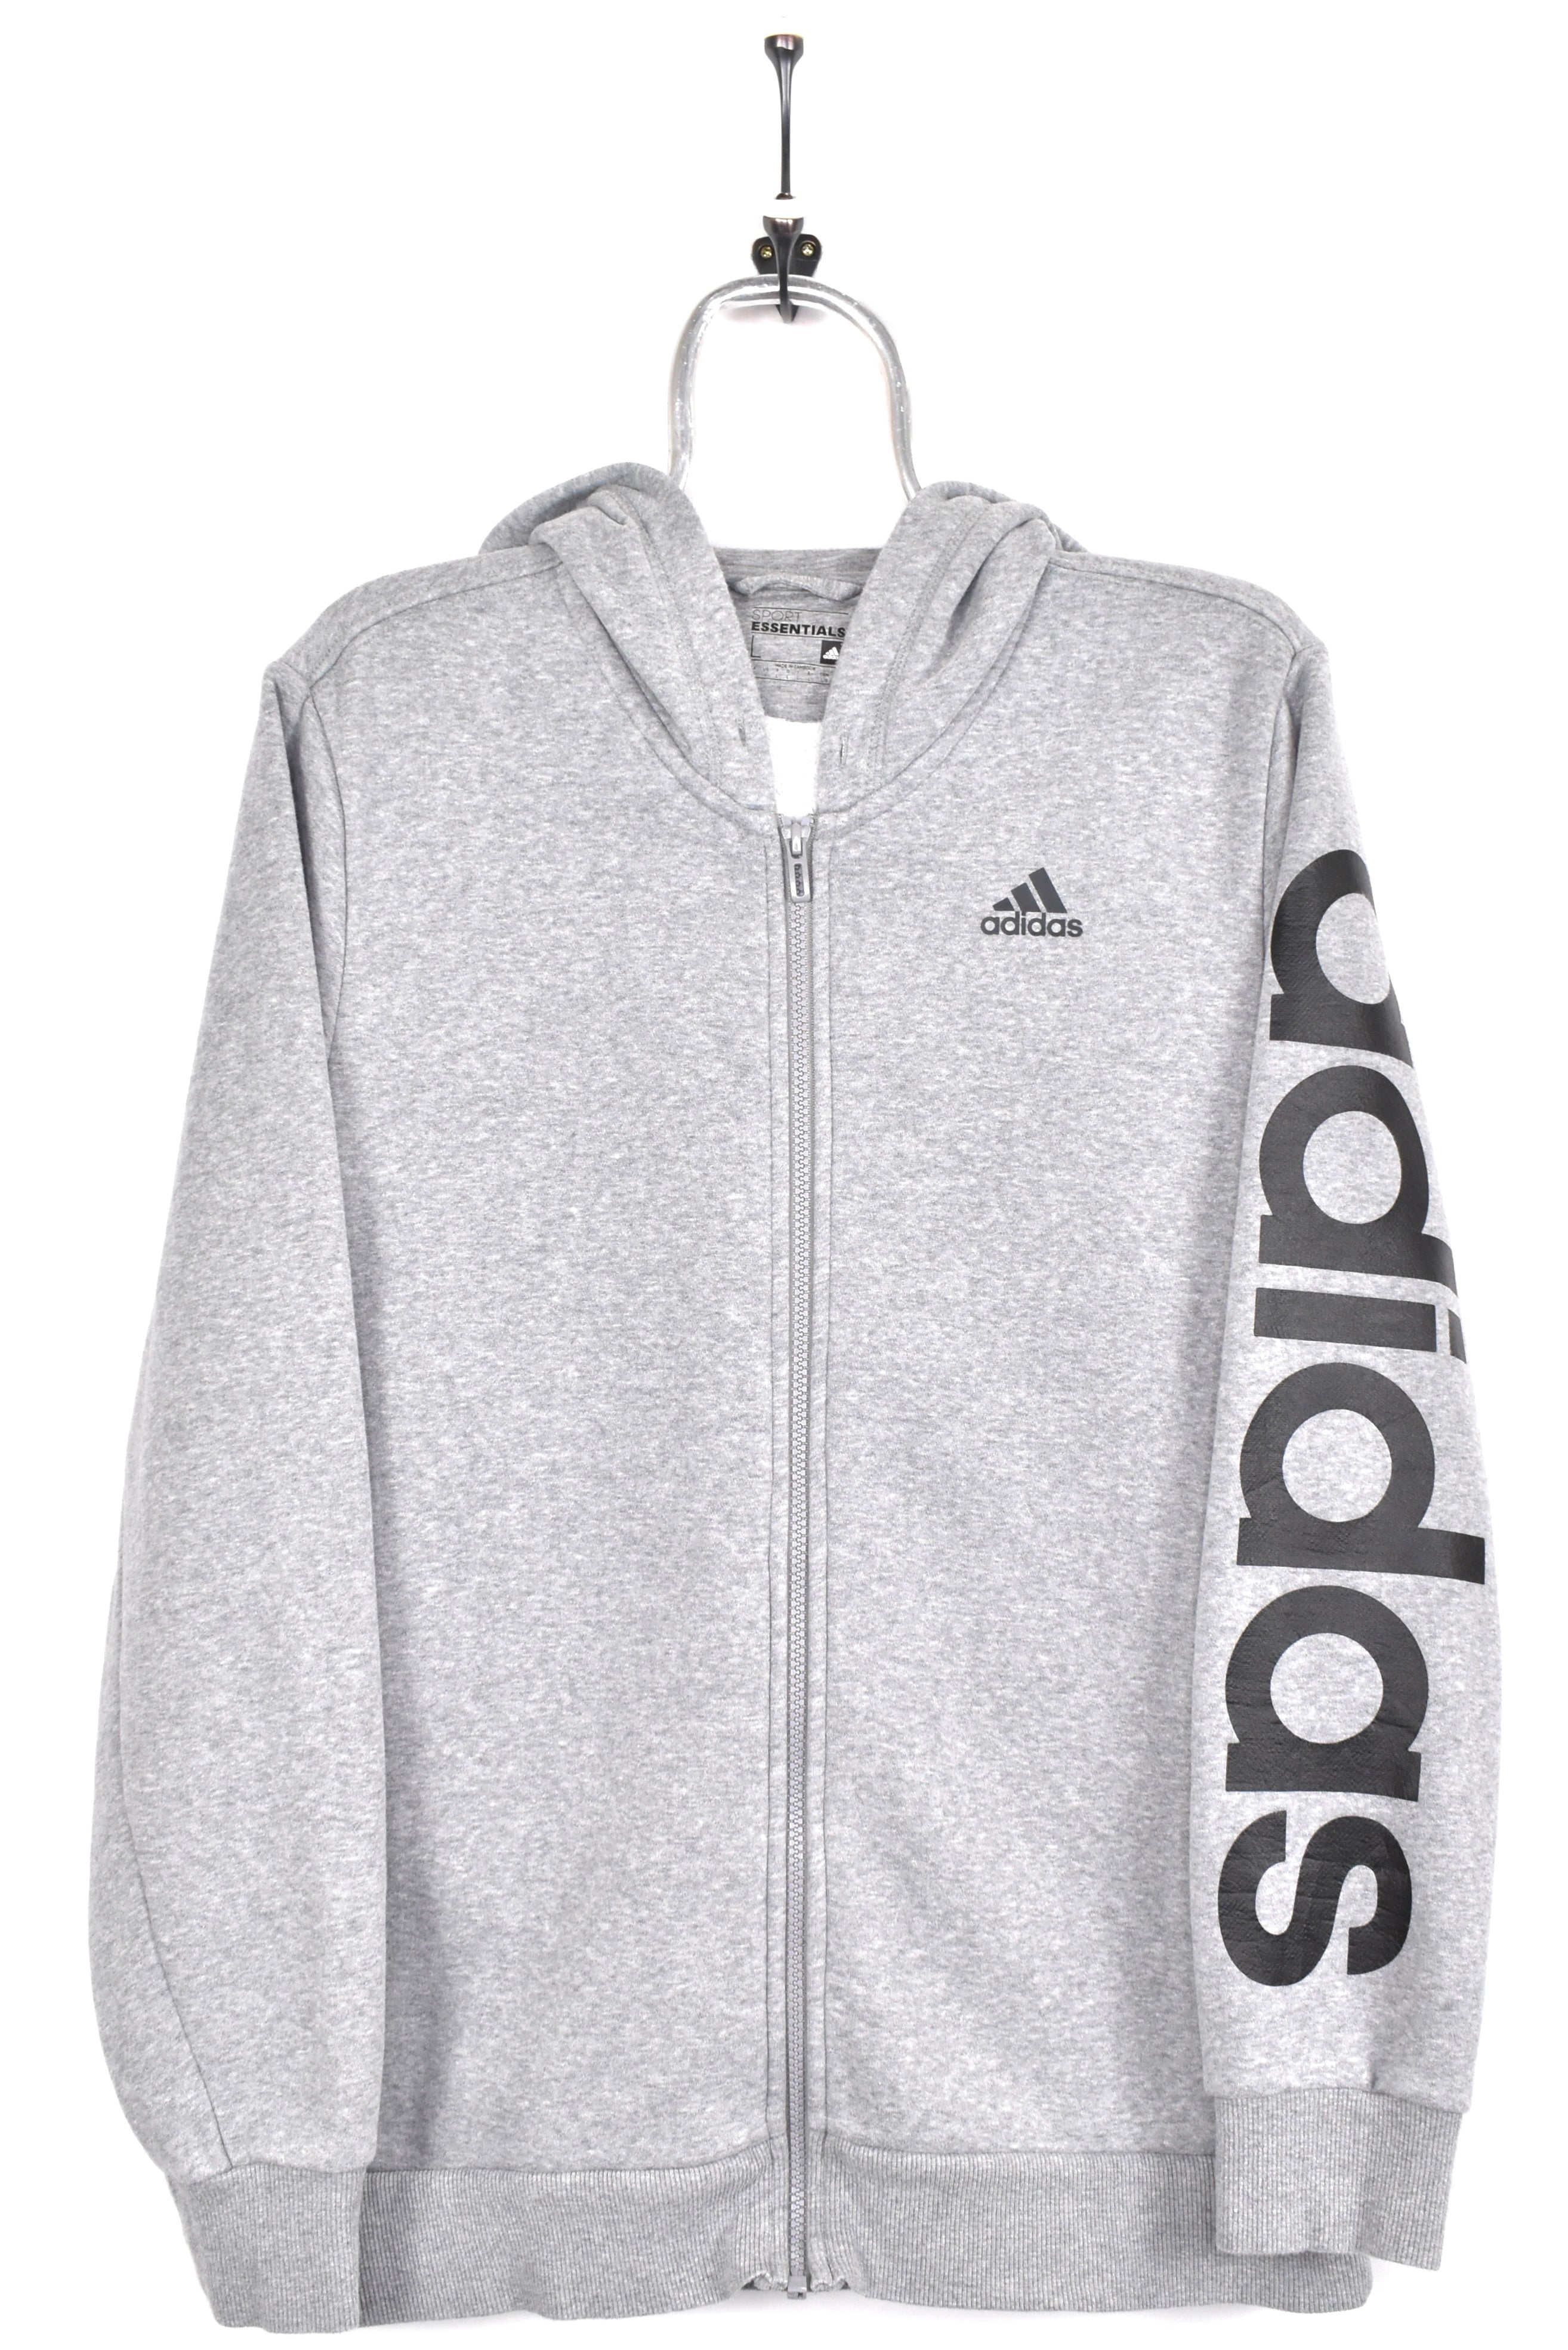 Modern Adidas hoodie, white embroidered sweatshirt - AU Medium